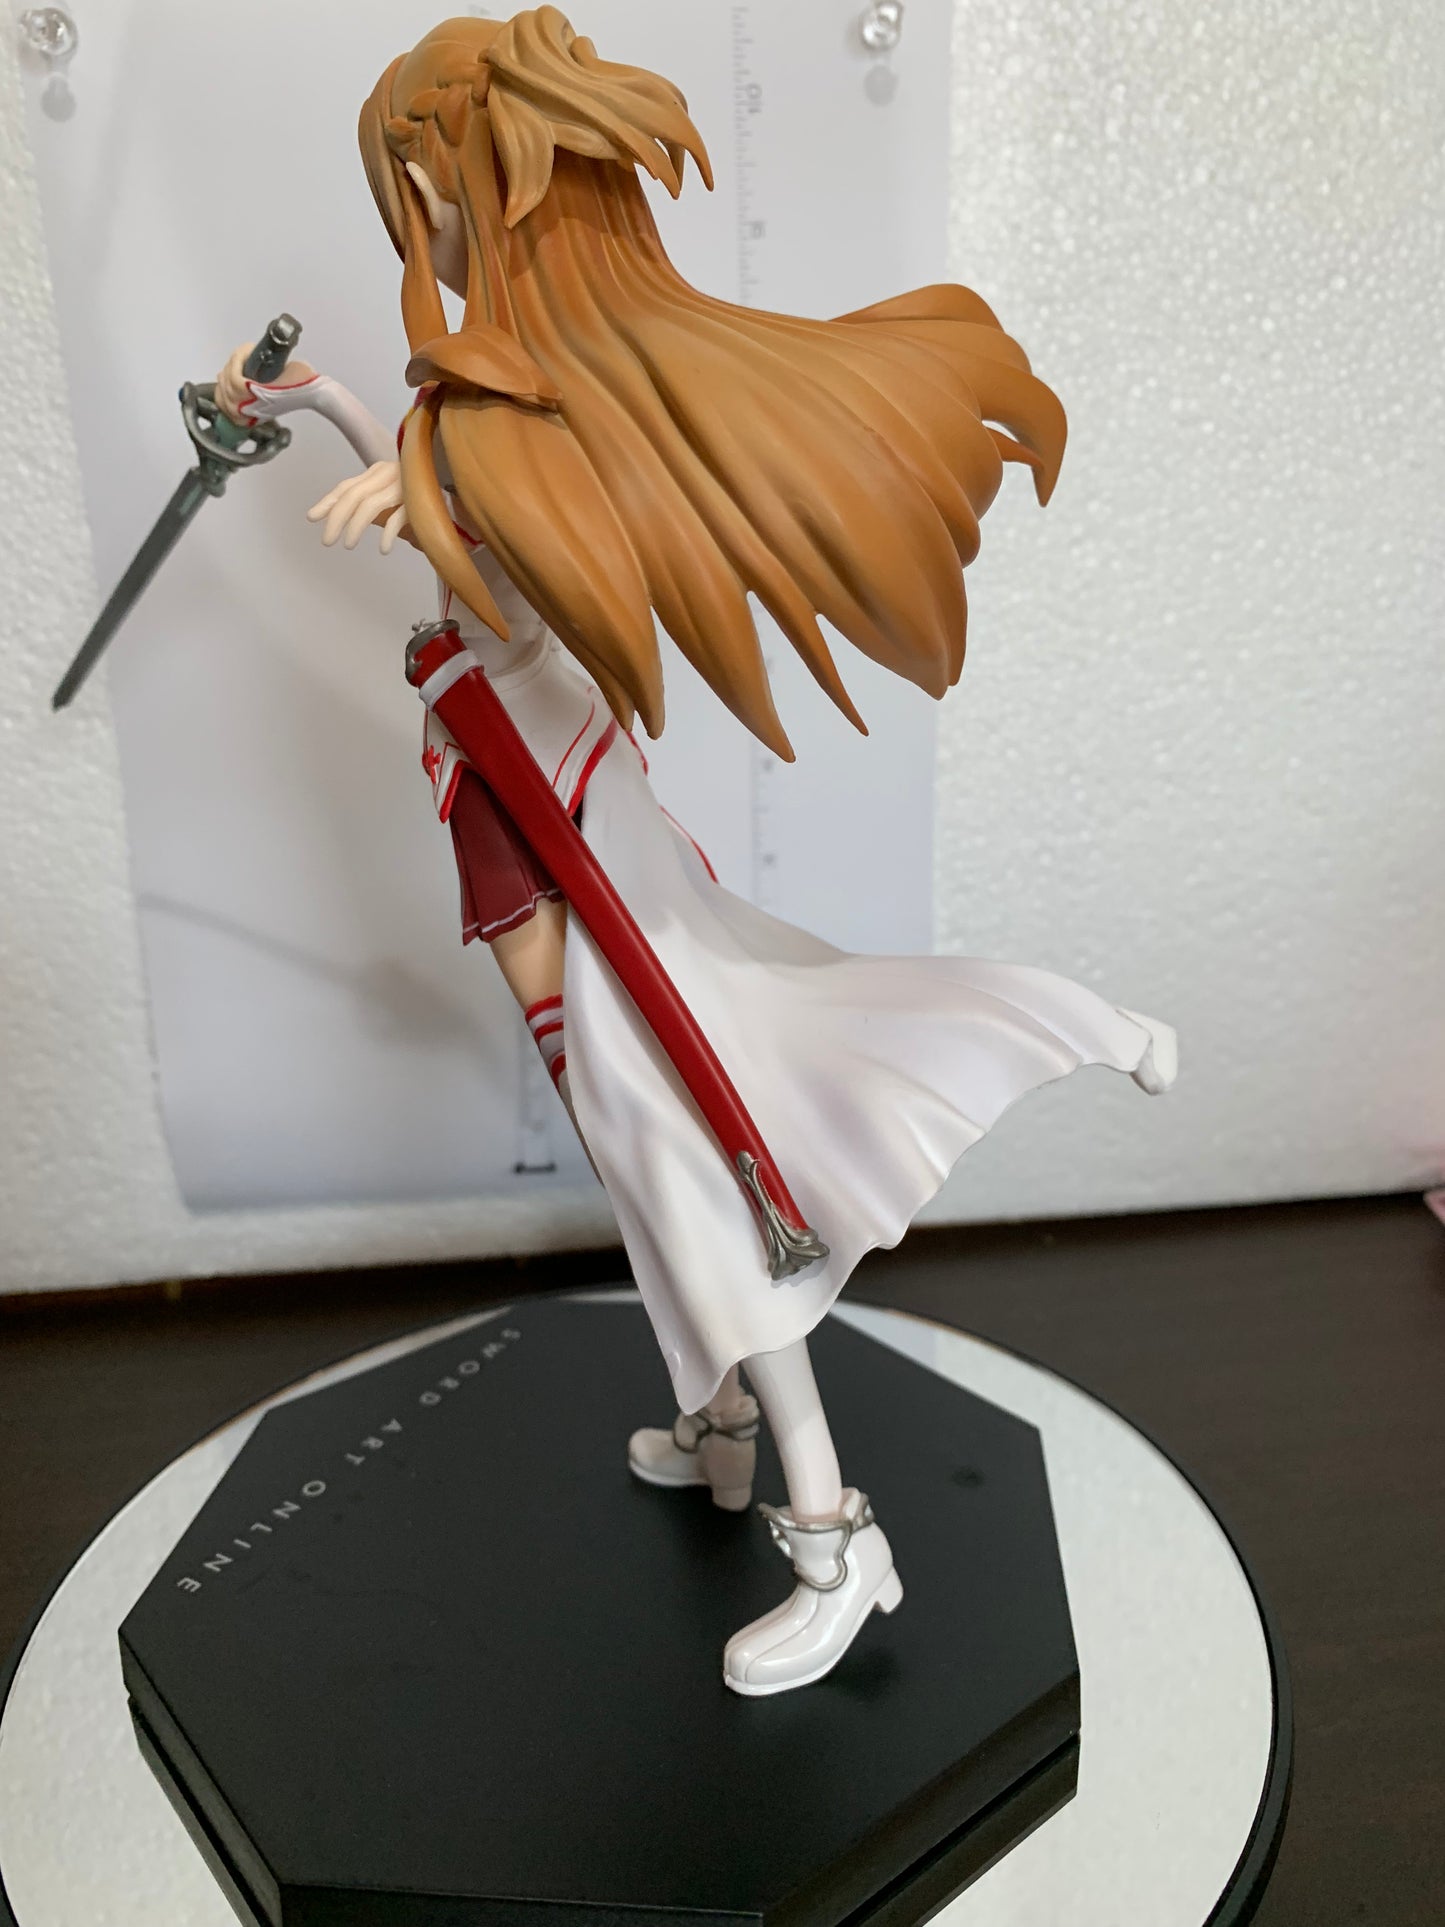 Sword Art Online SAO Asuna Yuuki 22cm SEGA Prize #067